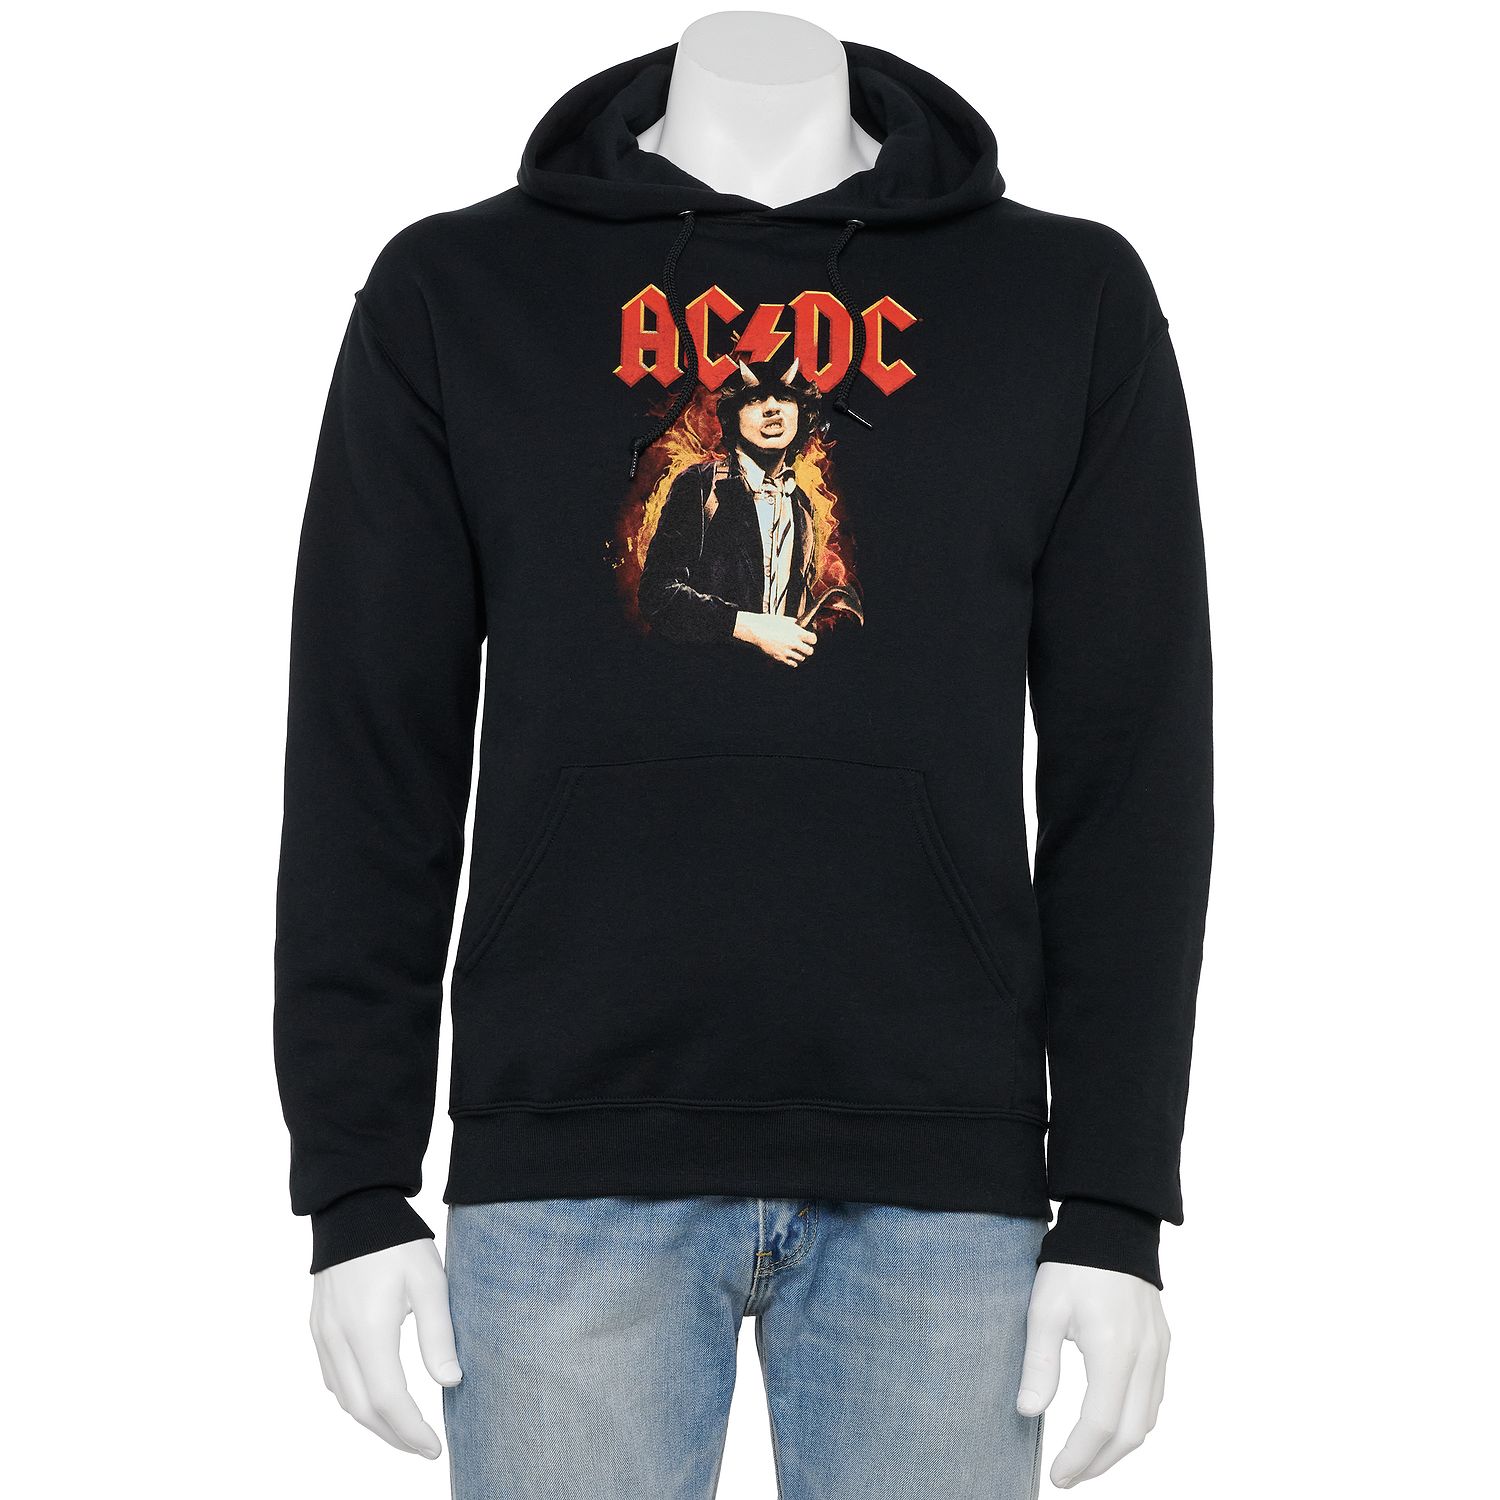 Kohl's Men's Graphic Music Hoodie: AC/DC, Pink Floyd, Weezer & More $8.50 + Free Shipping $49+